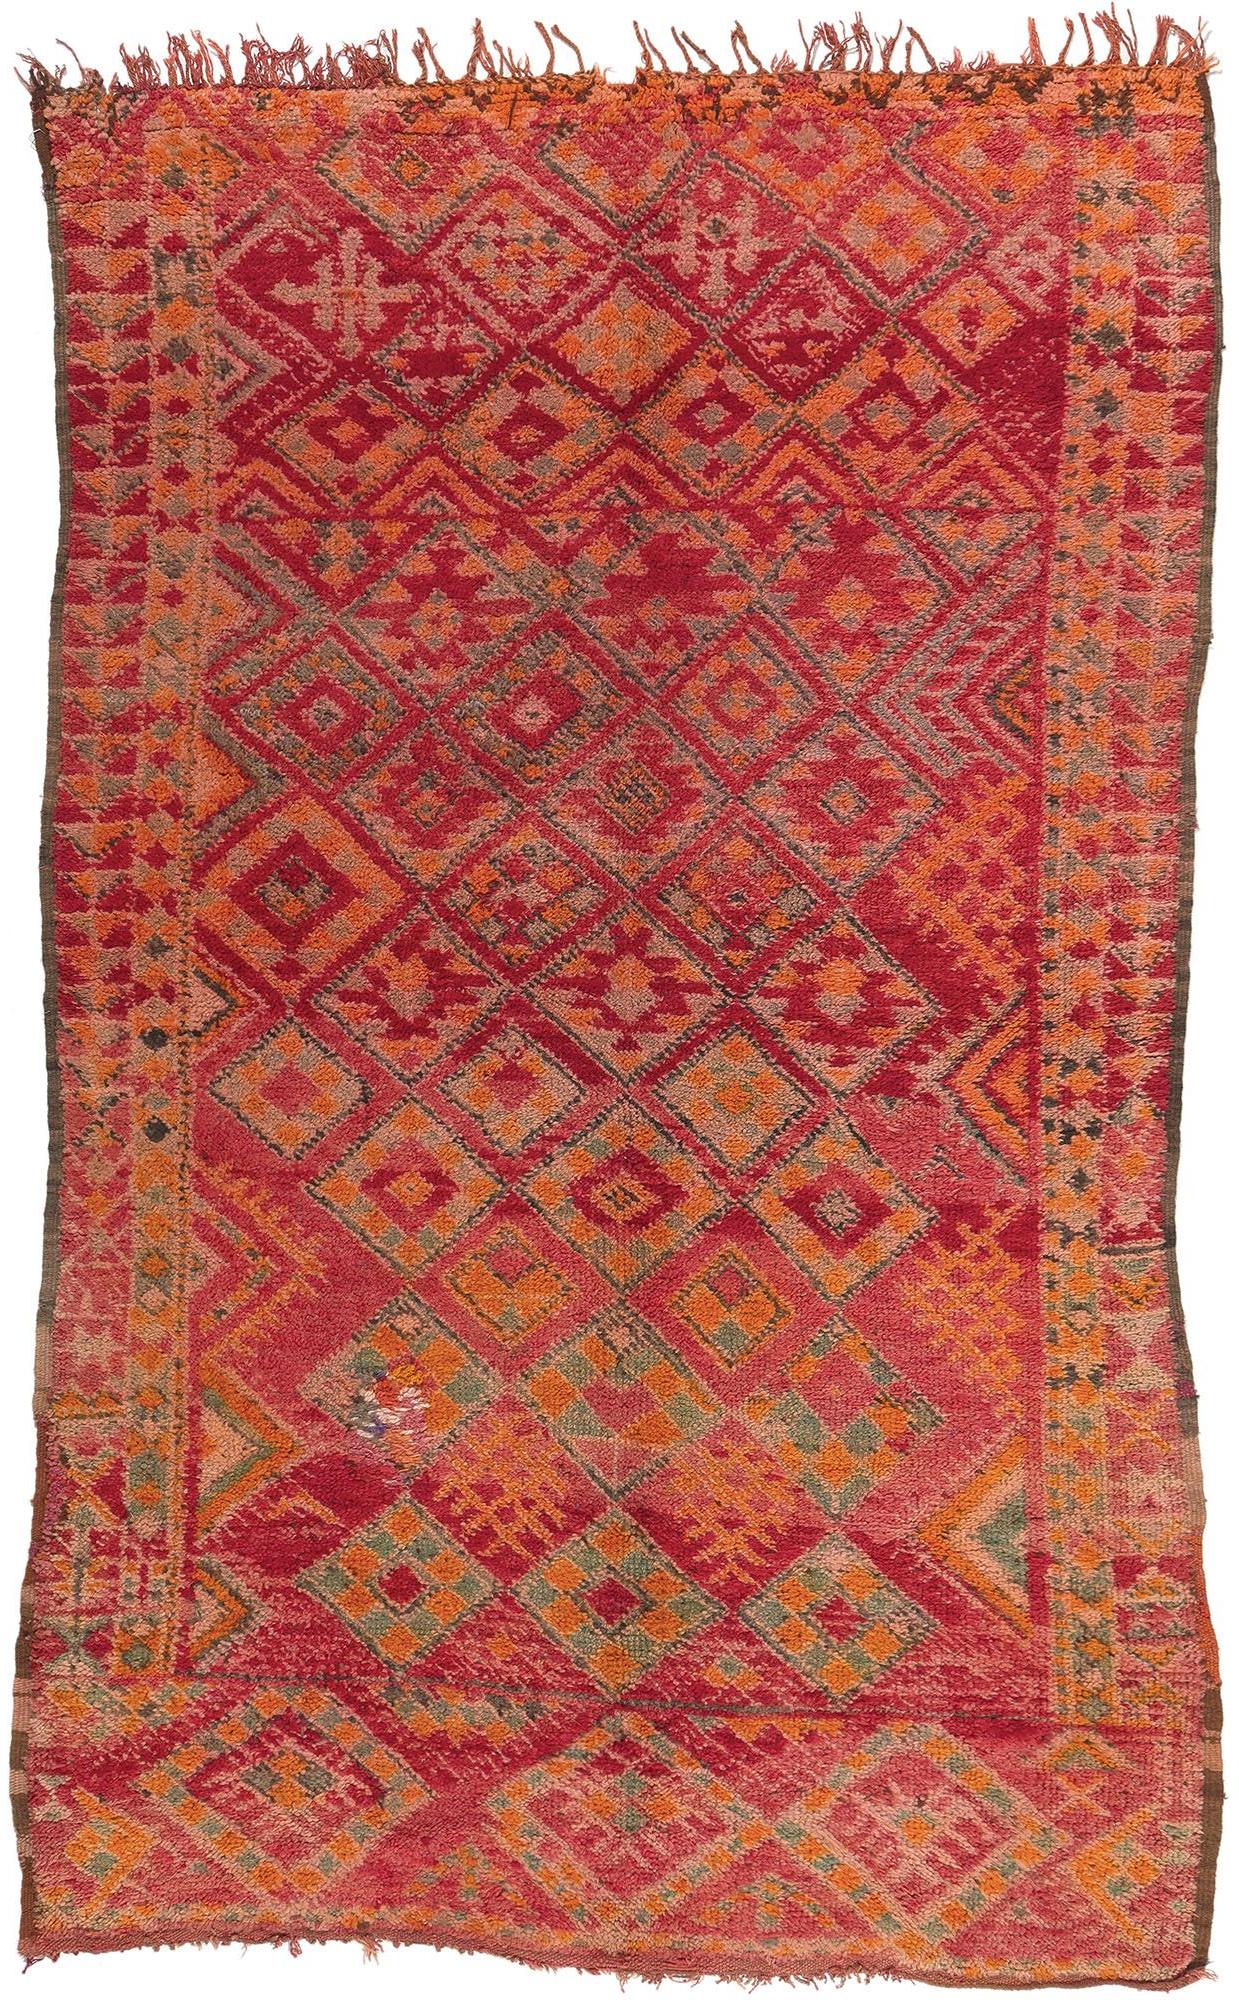 Vintage Talsint Moroccan Rug, Boho Jungalow Meets Nomadic Charm